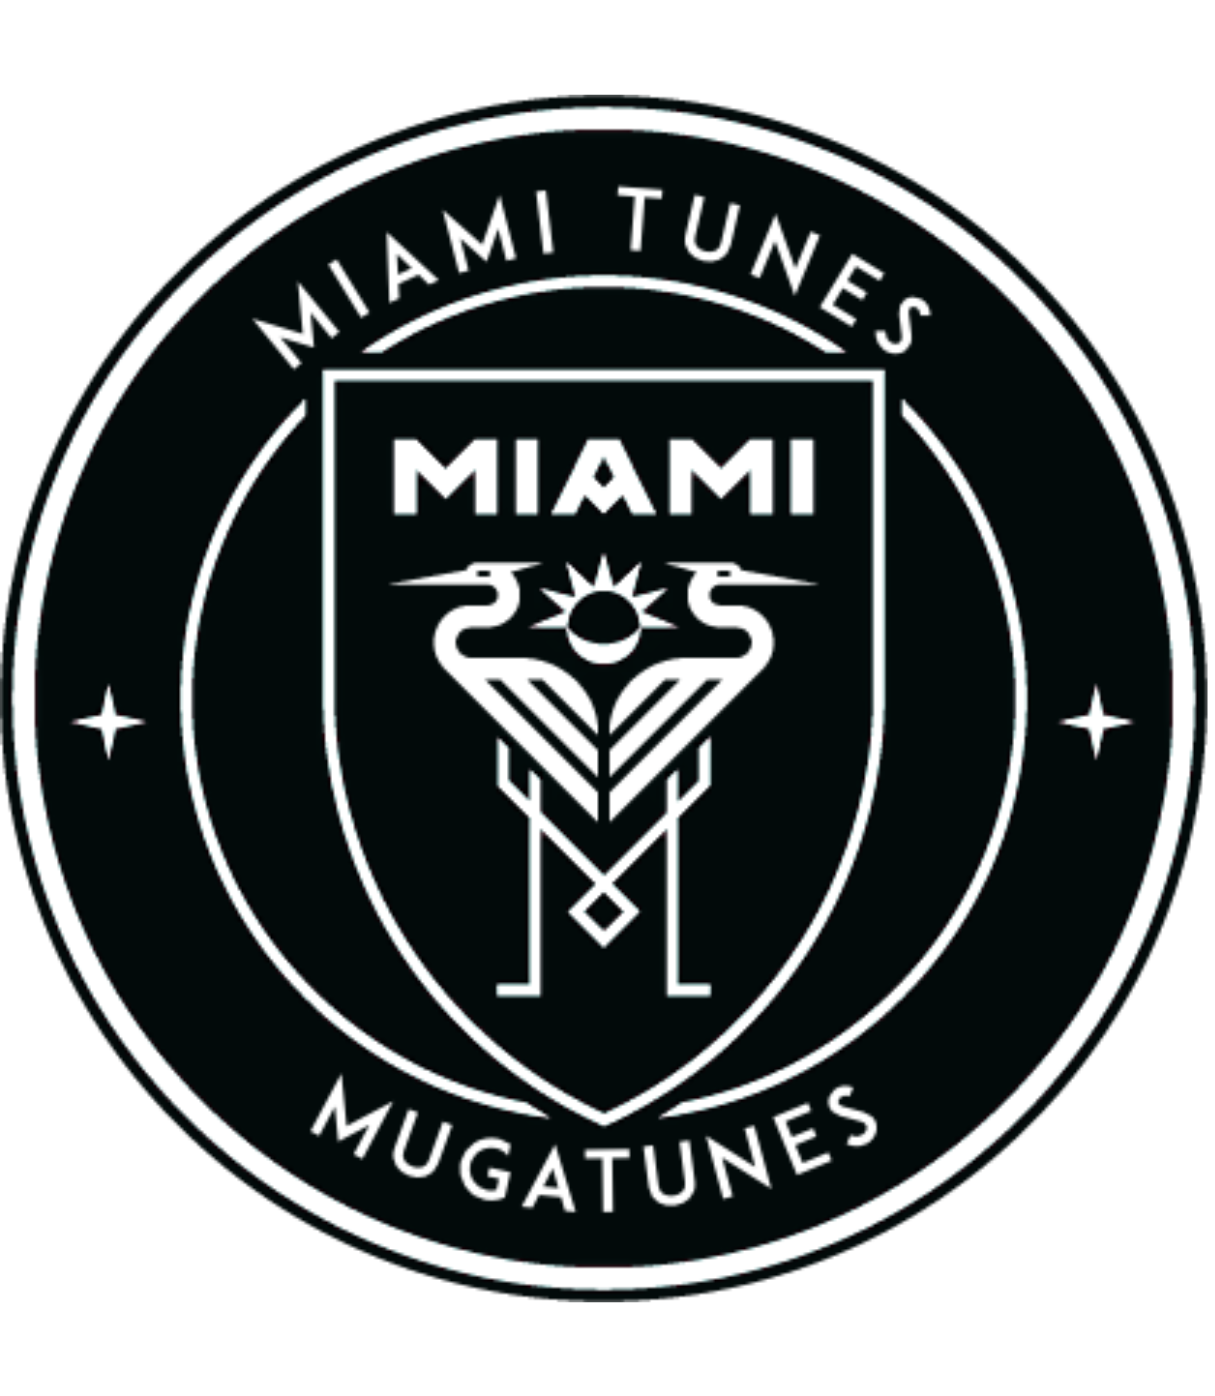 Miami Tunes Muga.png